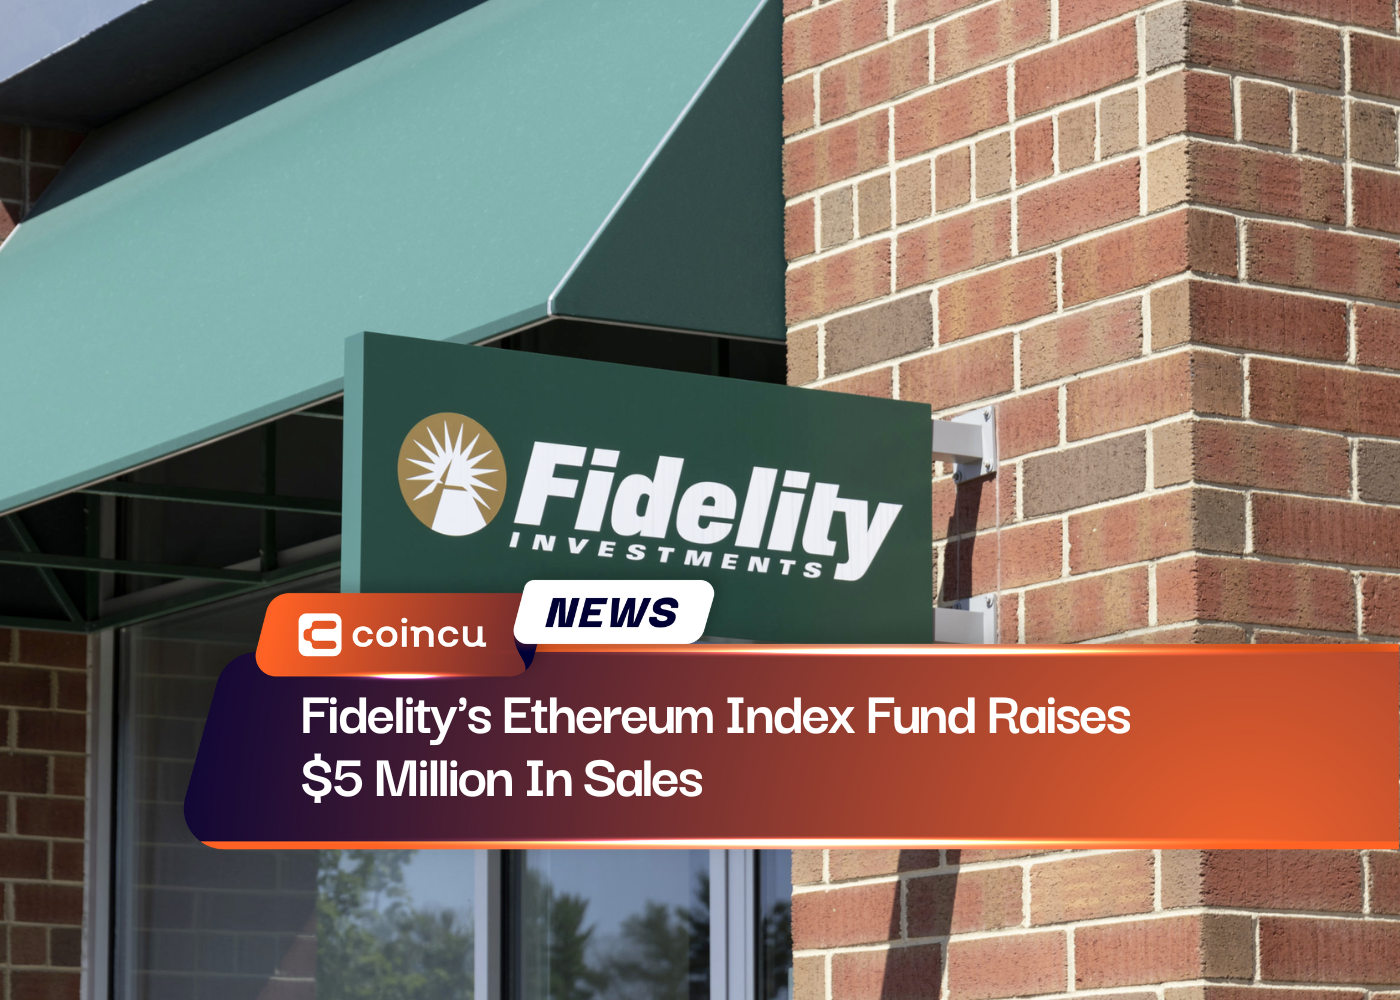 Fidelity's Ethereum Index Fund Raises $5 Million In Sales